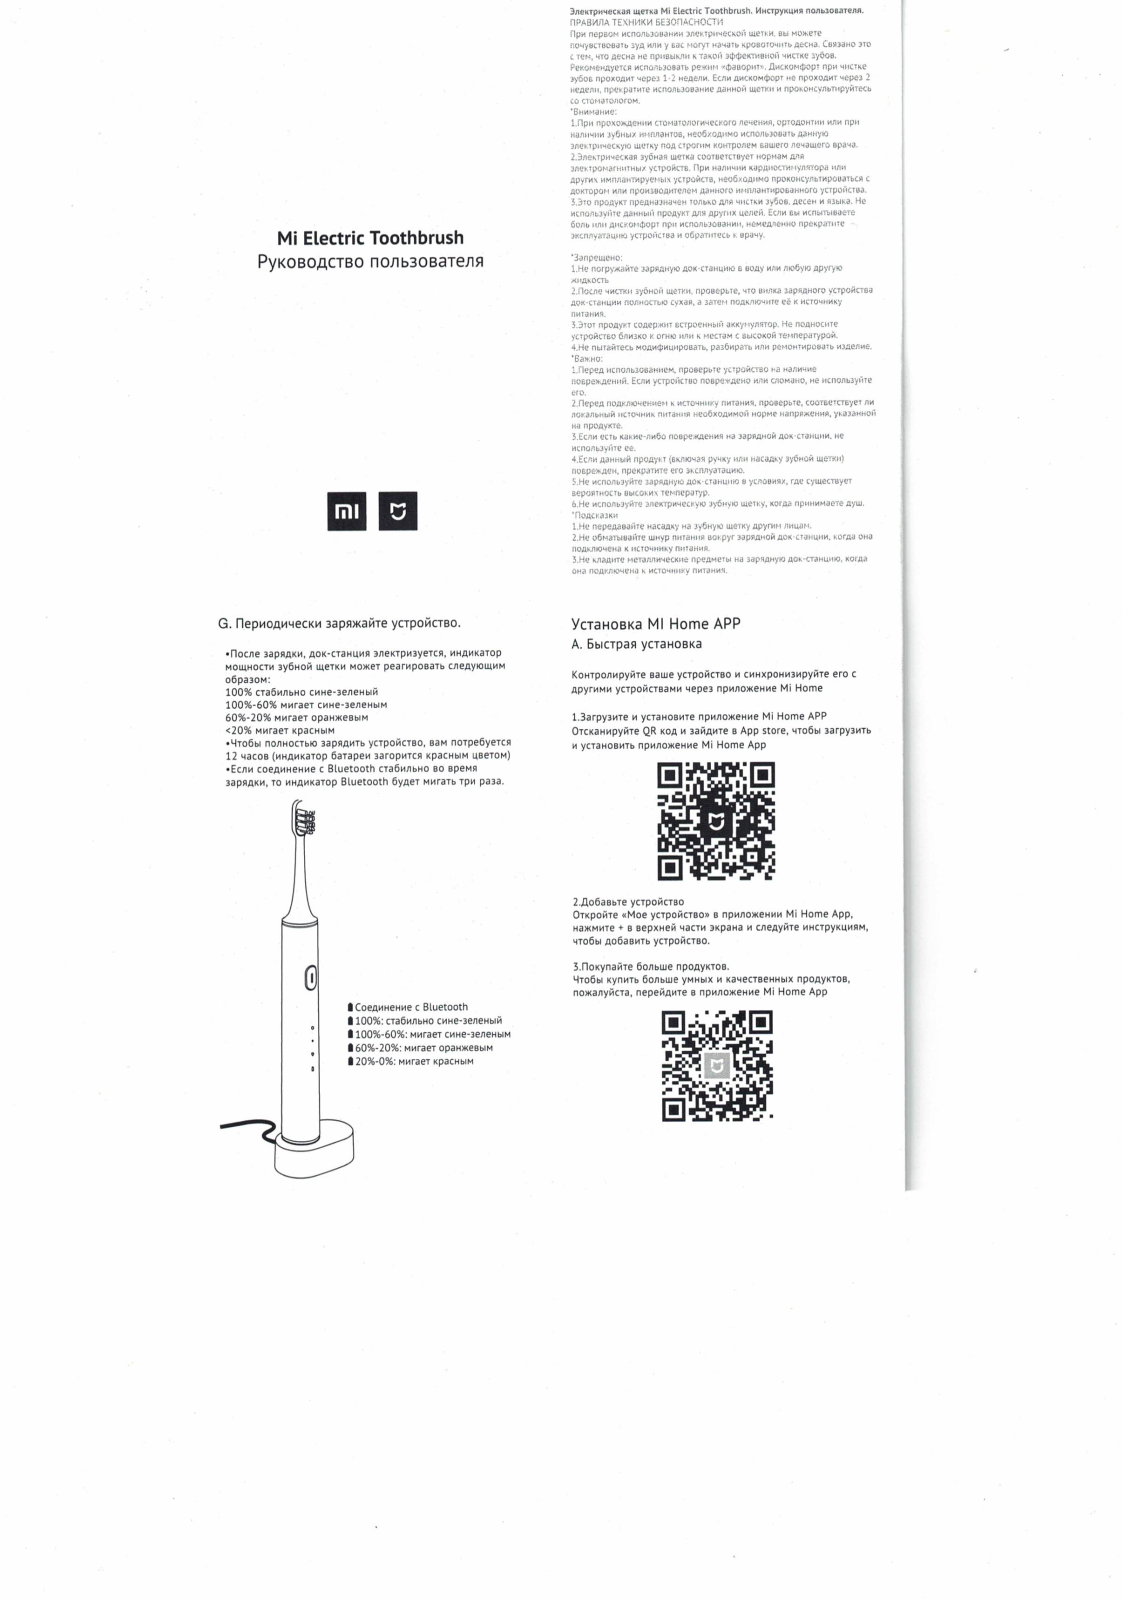 Xiaomi Mi Electric Toothbrush User Manual